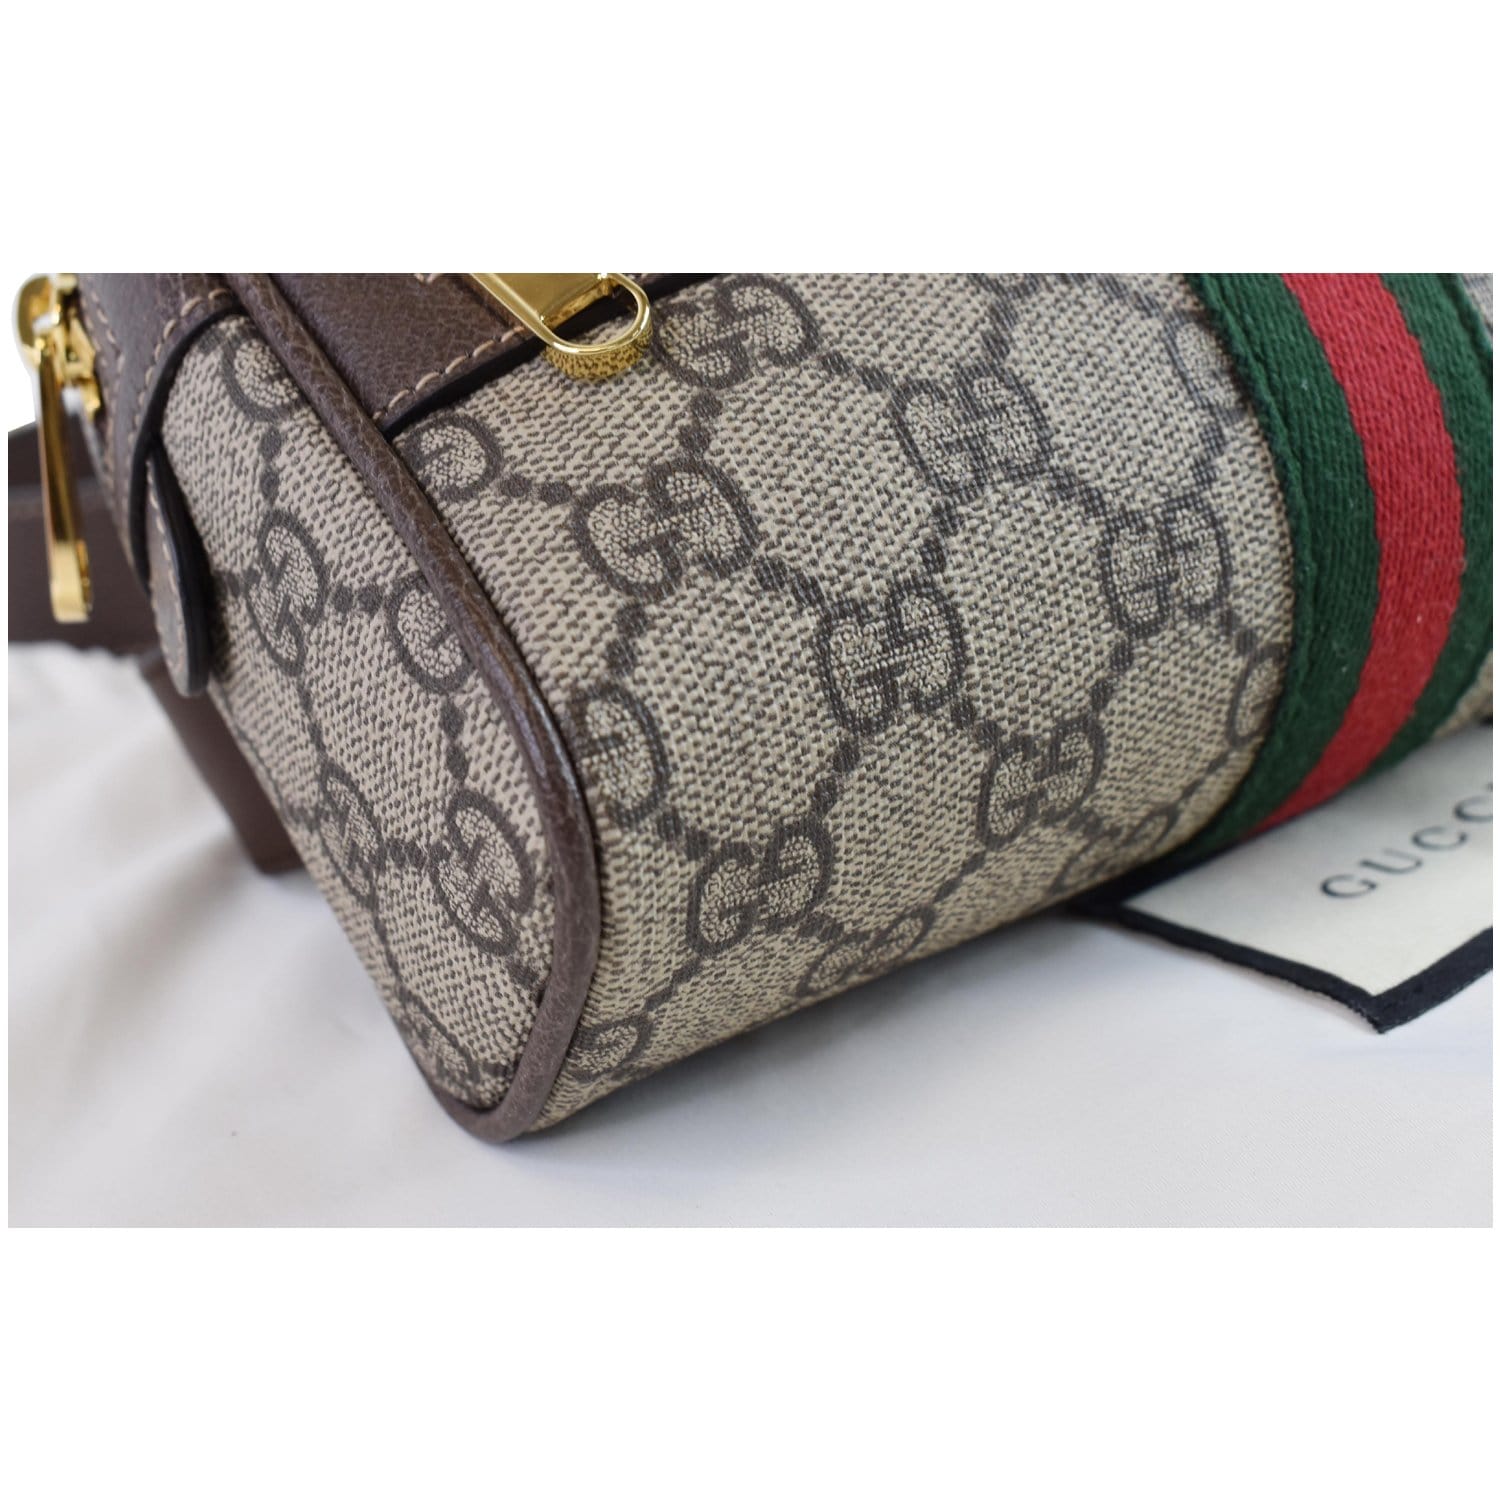 Gucci Small GG Ophidia Messenger Bag - Farfetch